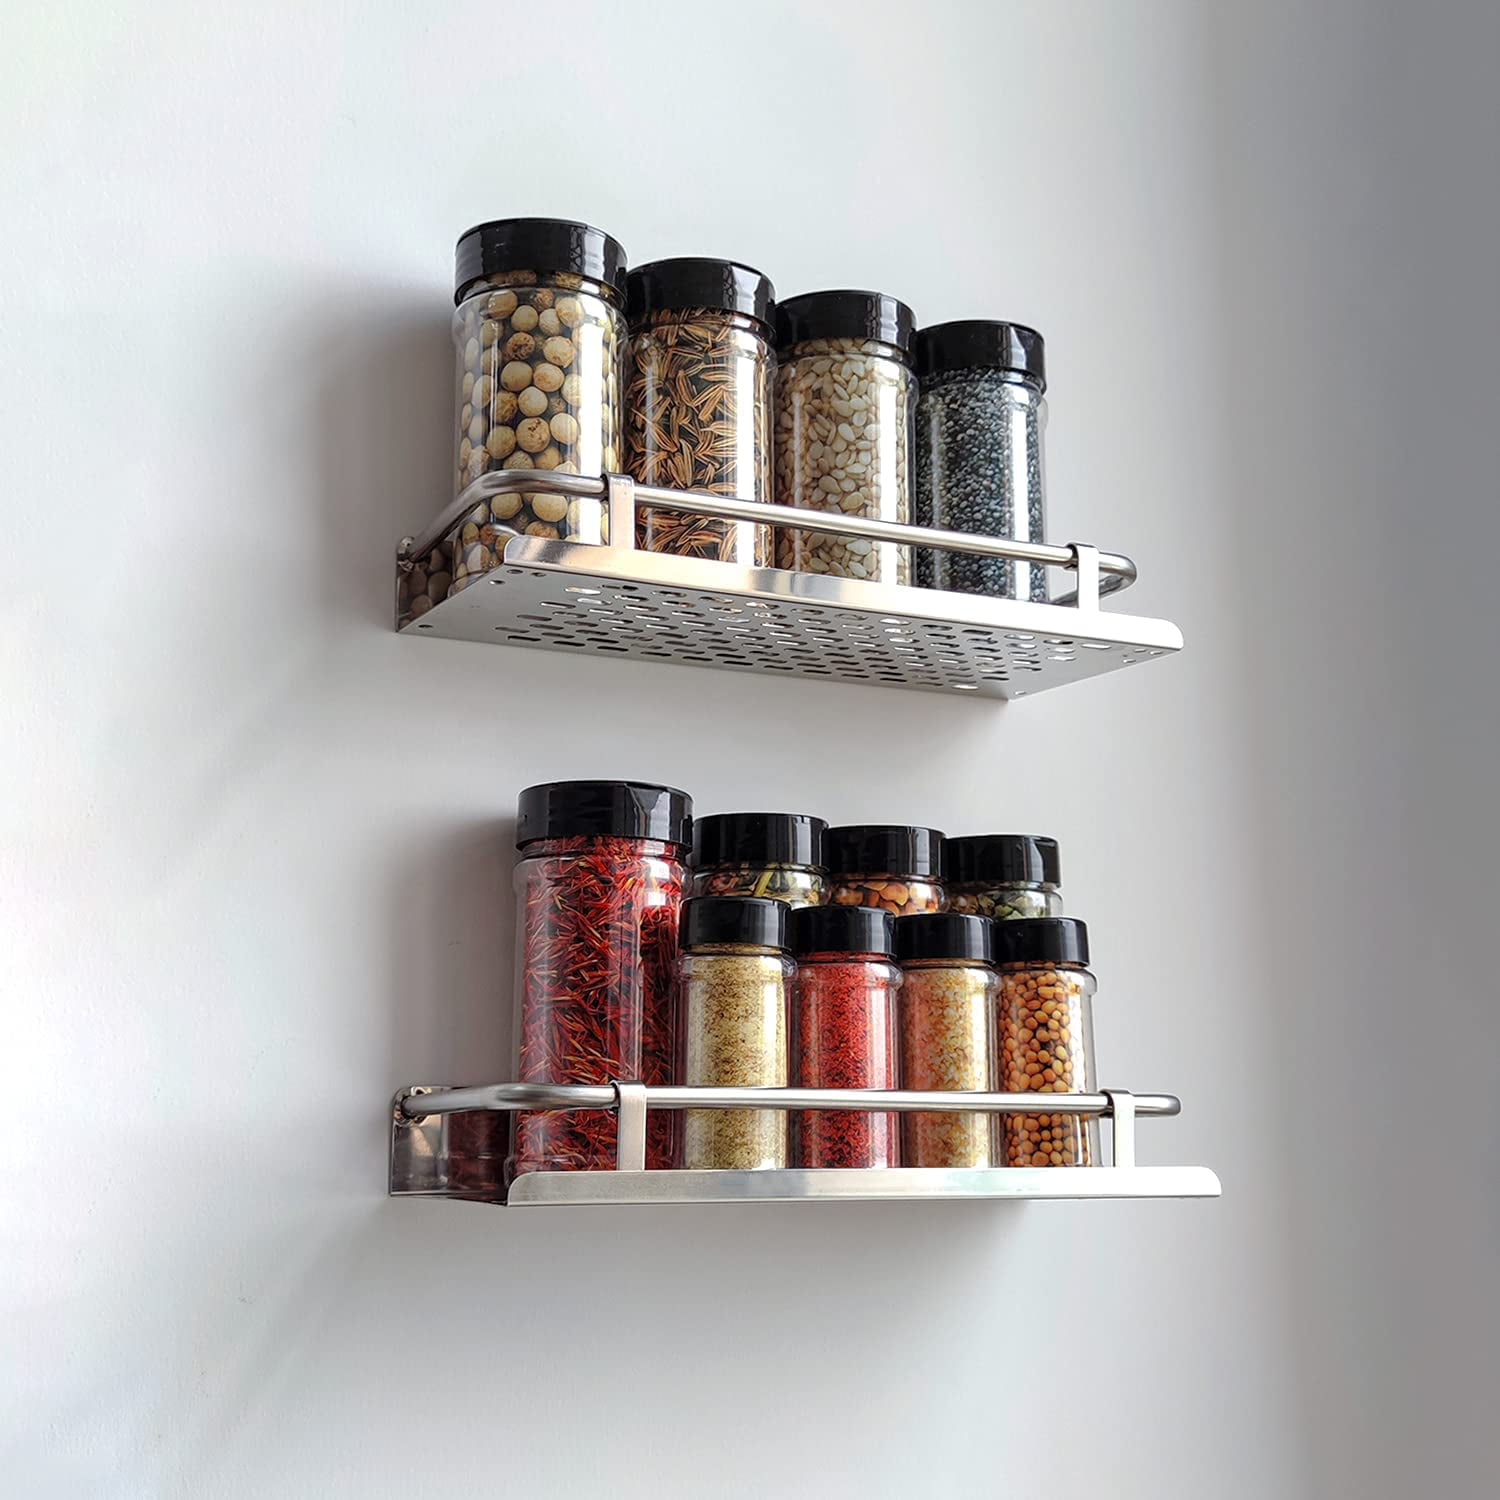 Wall mounted spice shelf